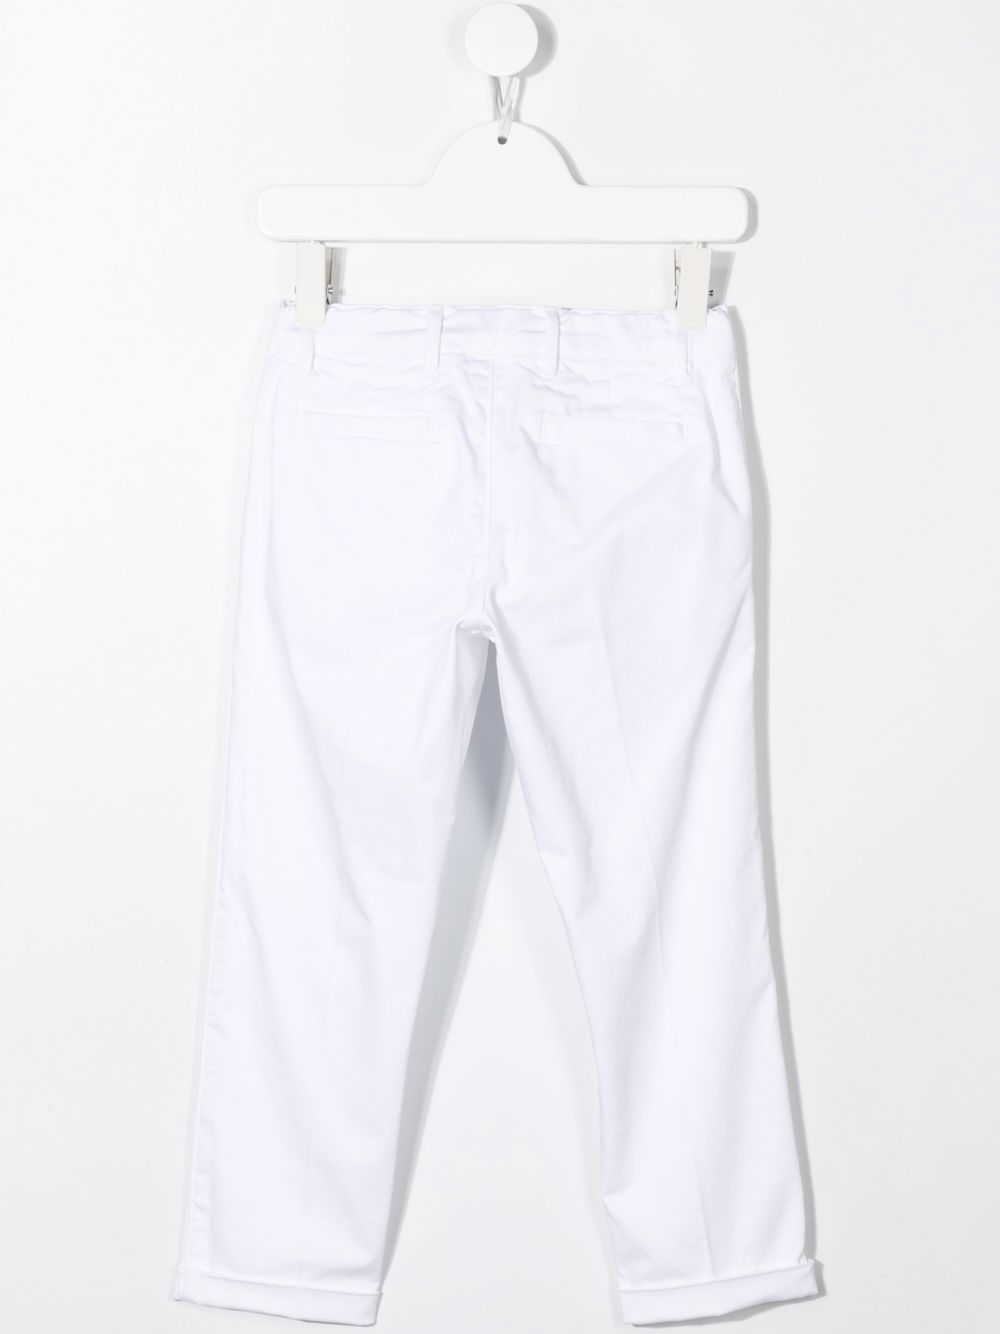 White cotton trousers for children